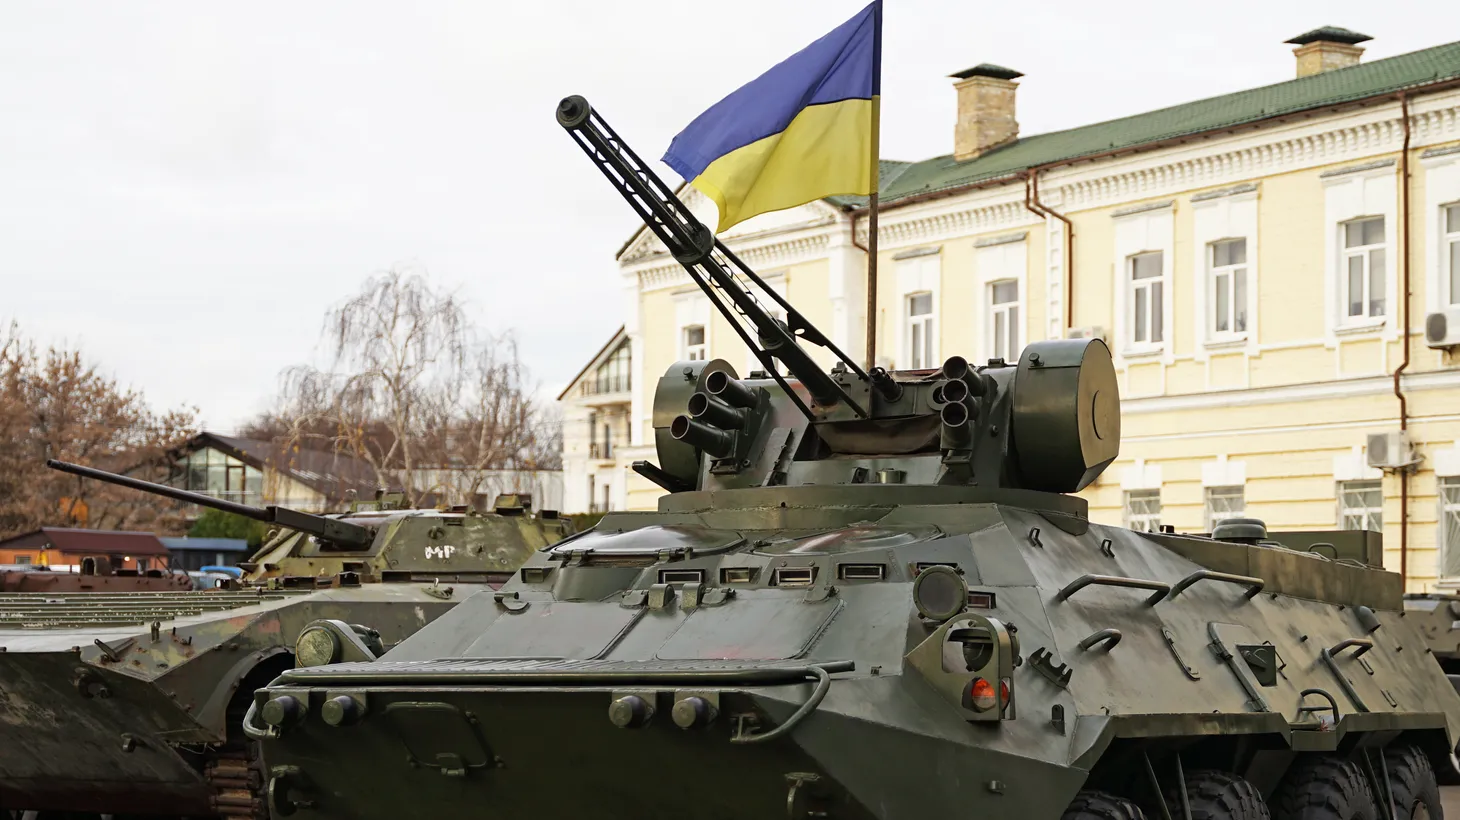 Army troops transporter and tank with Ukrainian flag, Kyiv Ukraine.